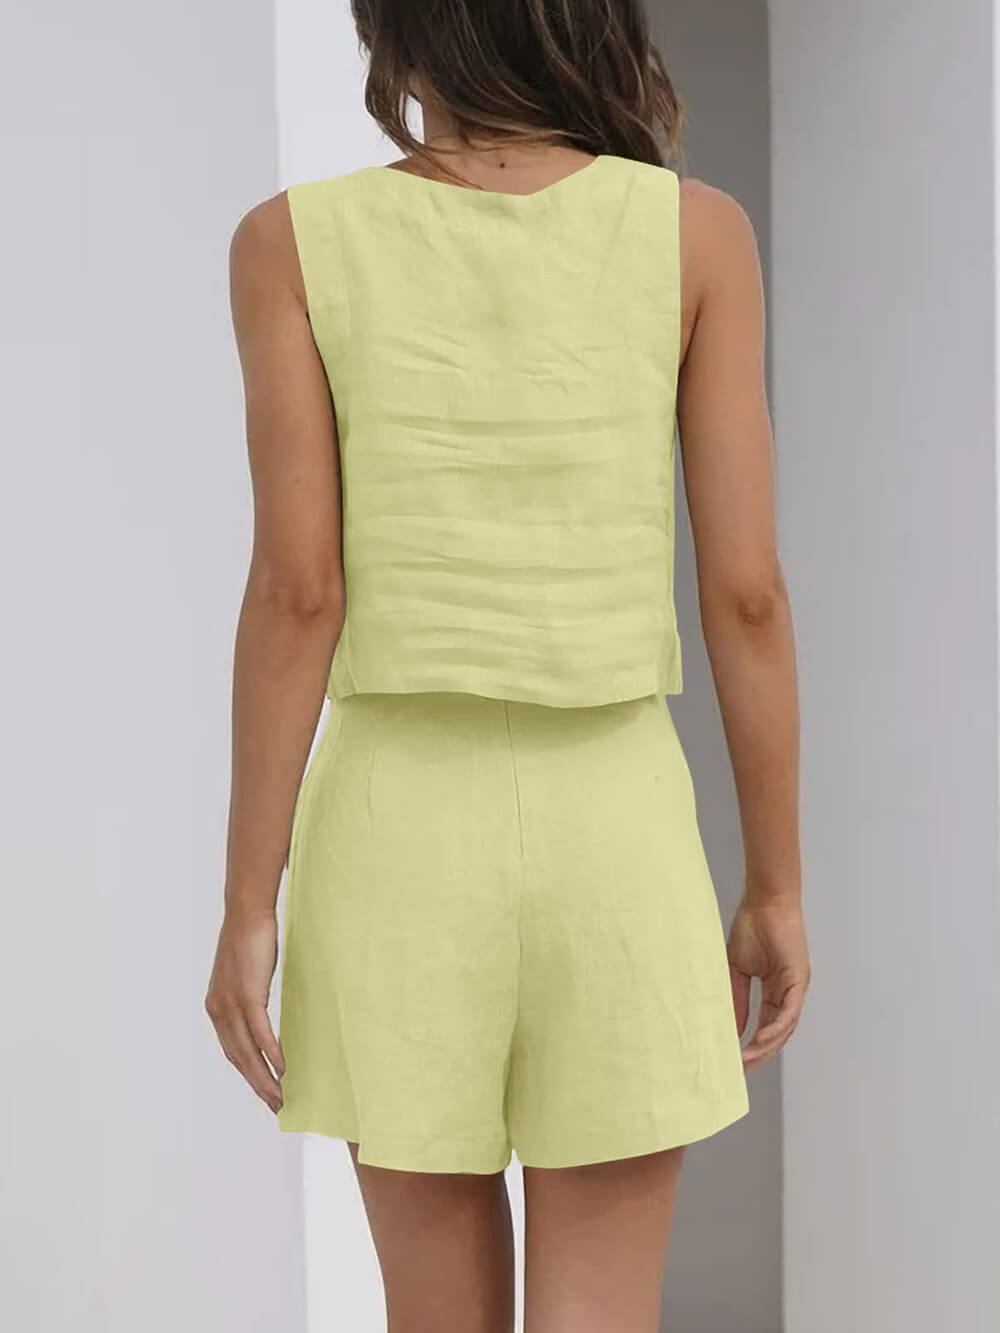 Summer Refreshing Sleeveless Vest Top Shorts Set